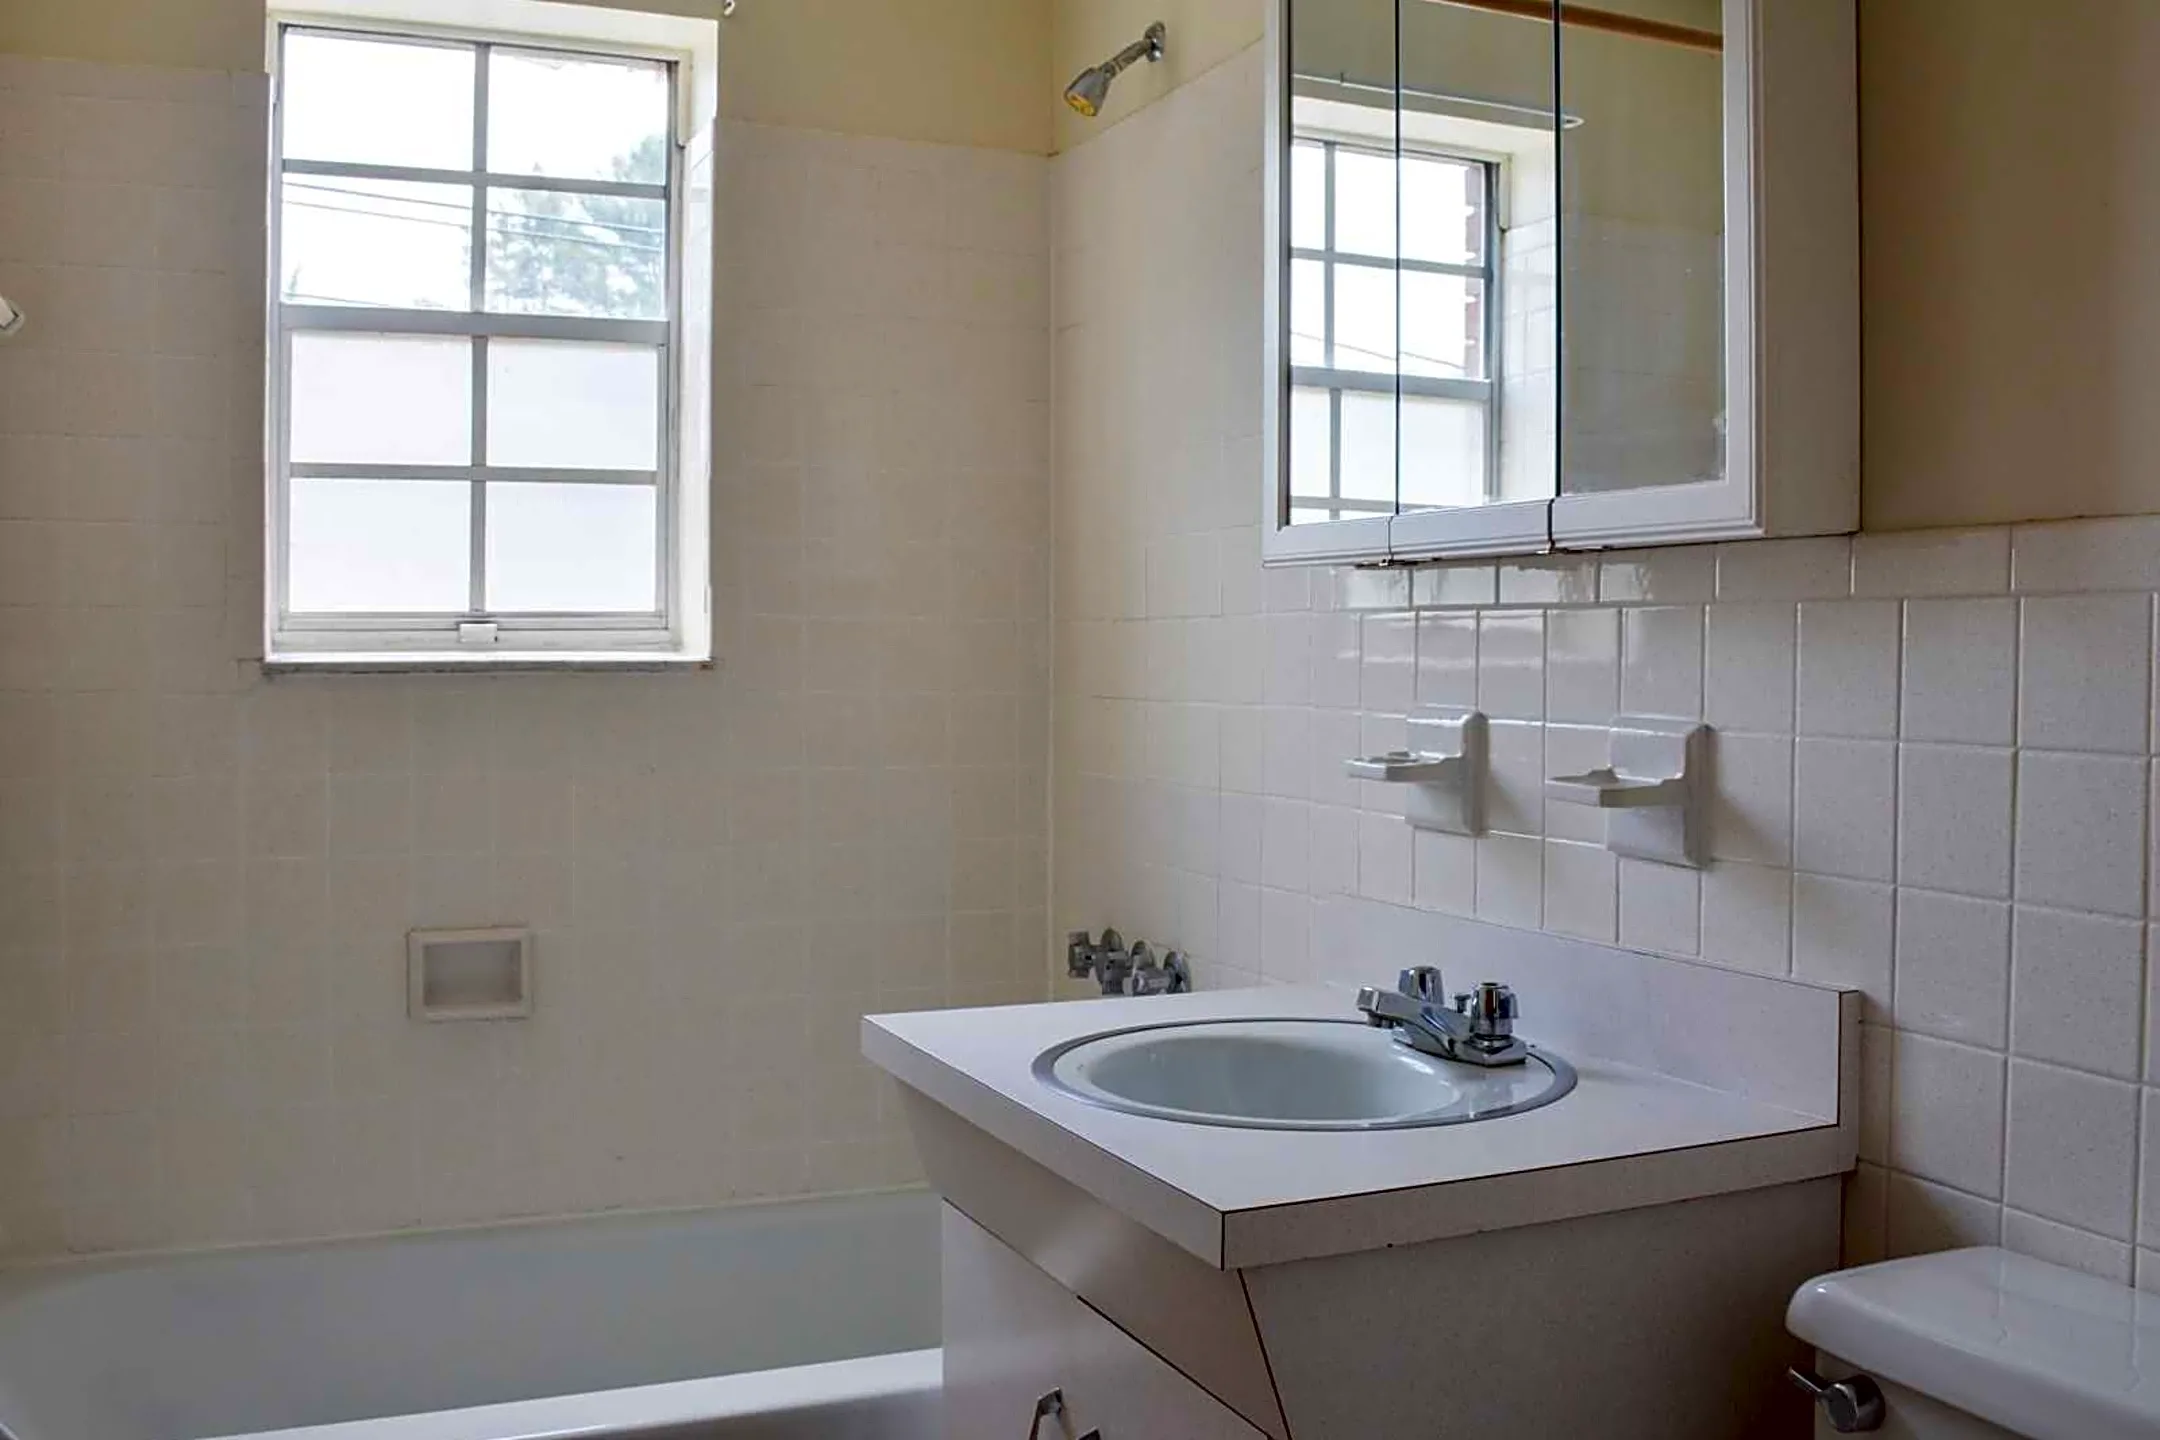 Bathroom - Caya Avenue Apartments - West Hartford, CT